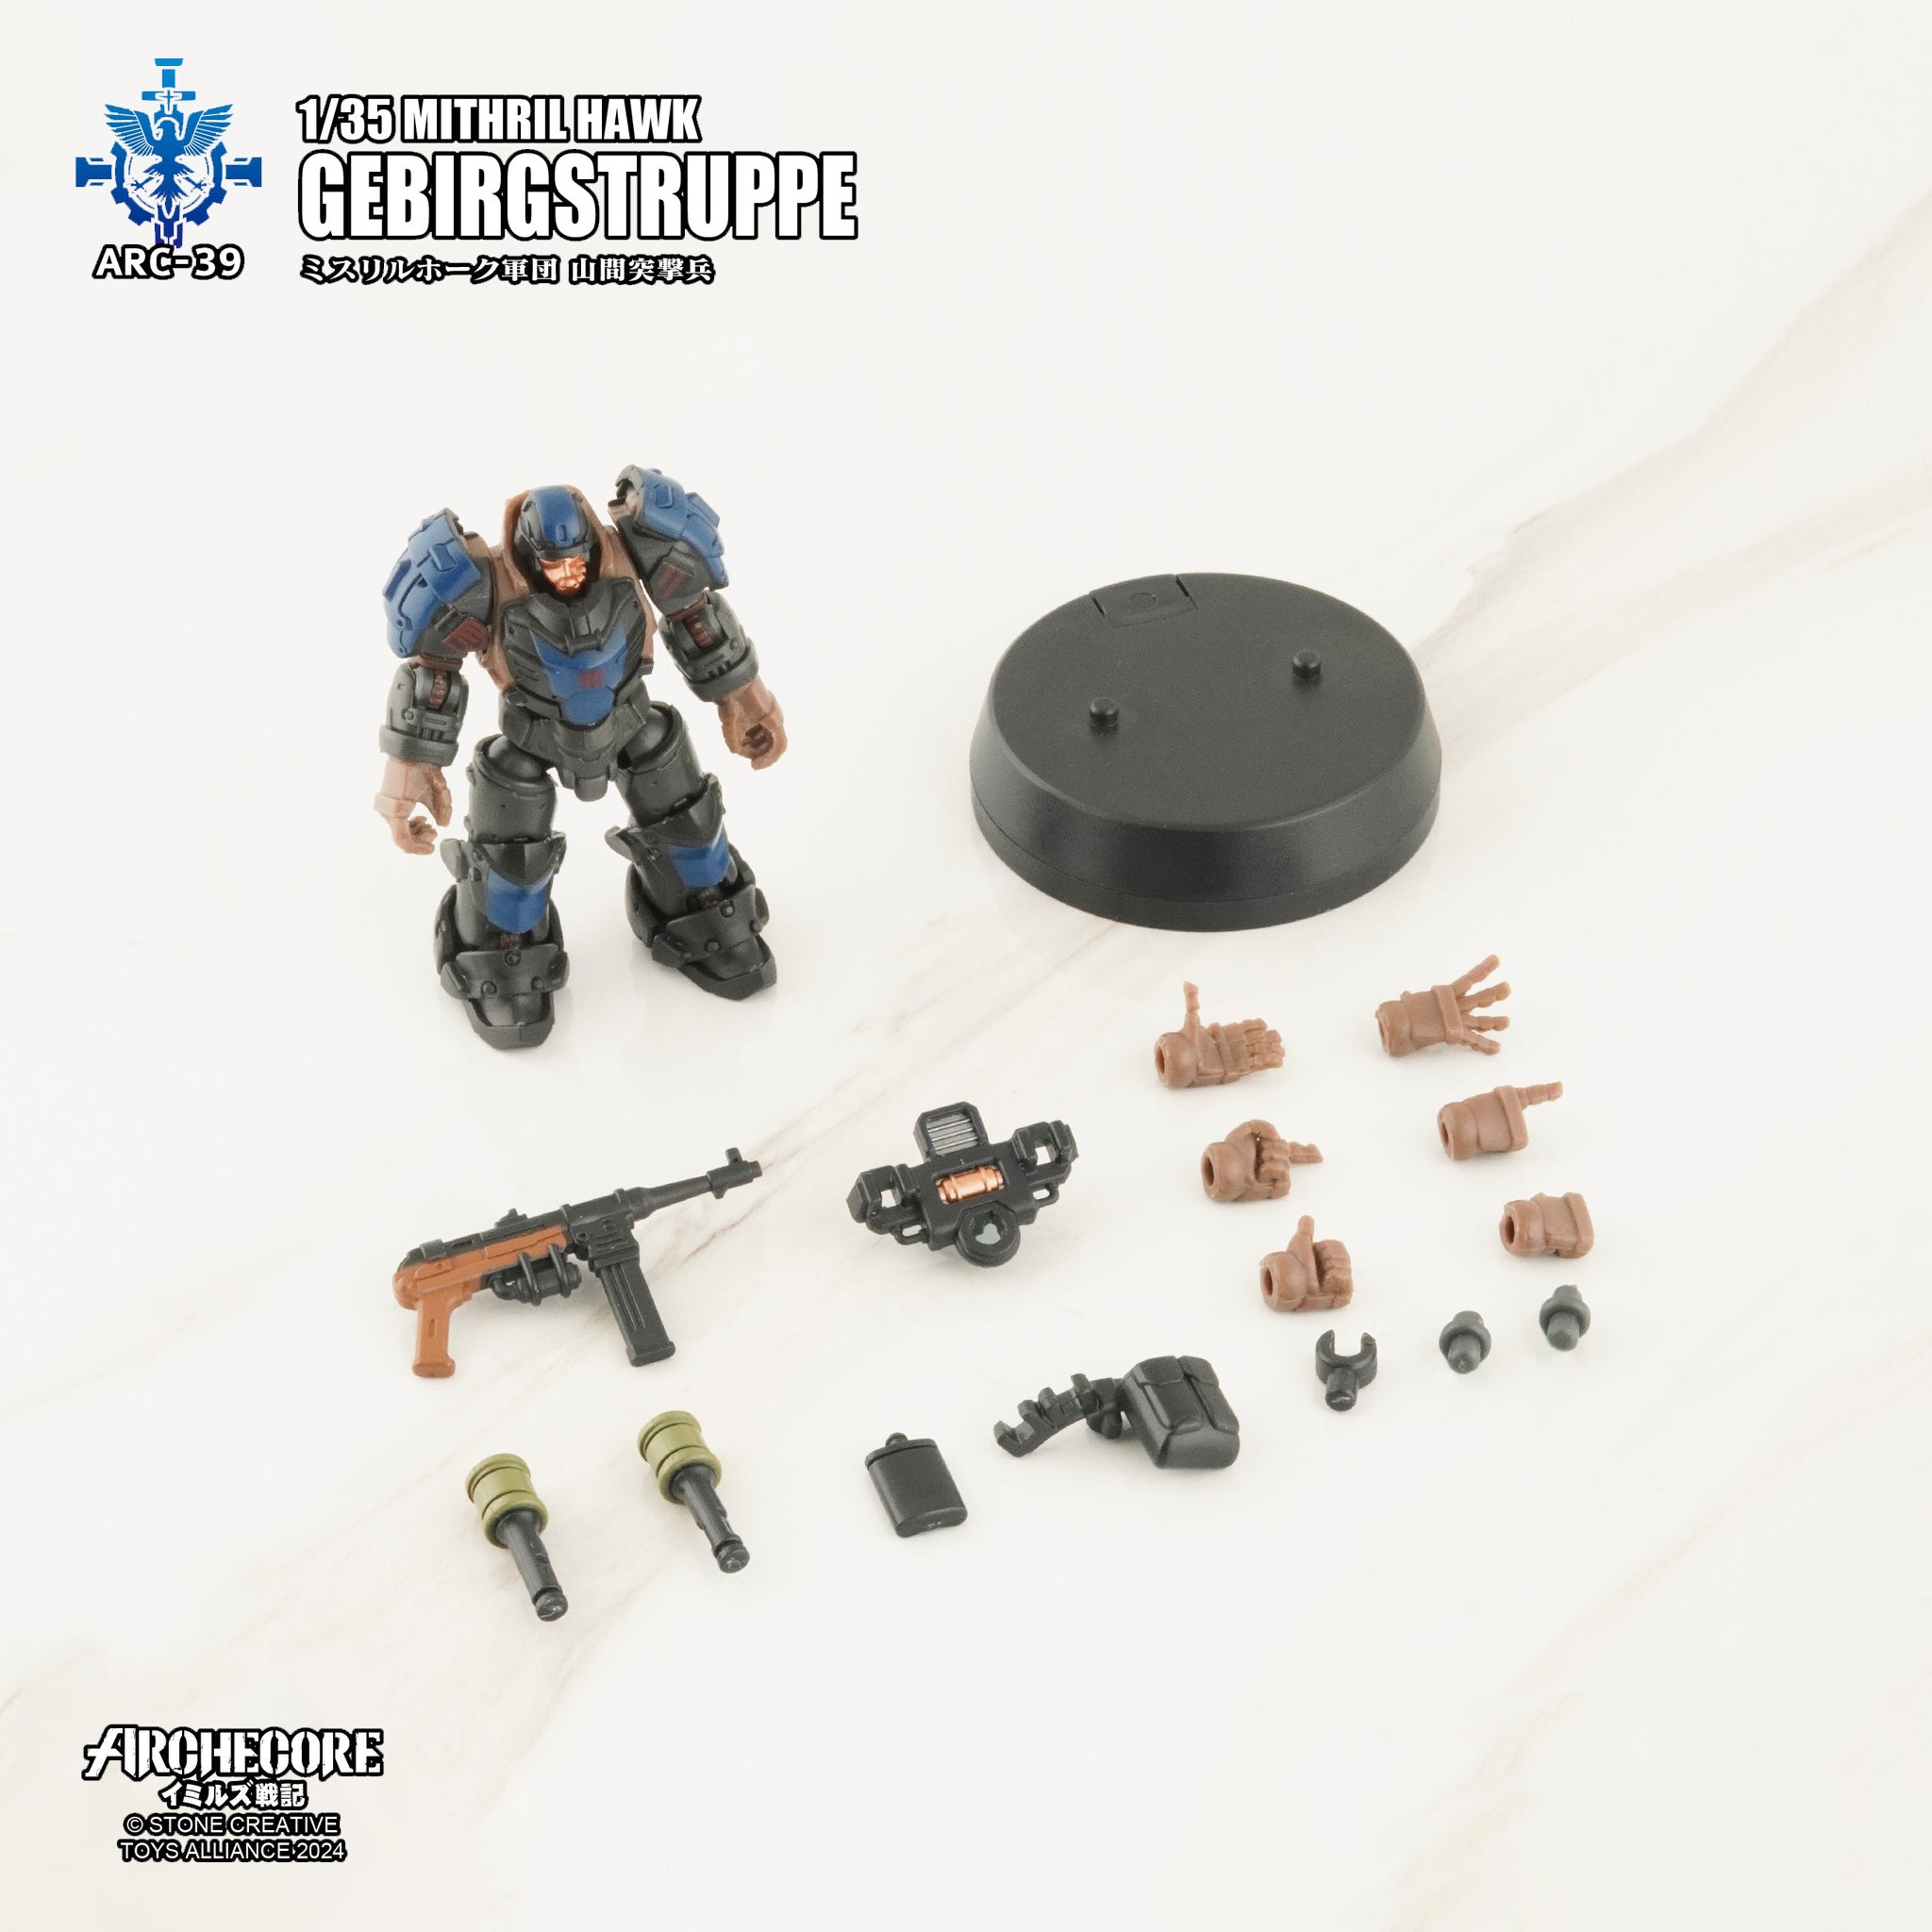 Toys Alliance - Archecore - ARC-39 - Mithril Hawk Gebirgstruppe (1/35 Scale) - Marvelous Toys